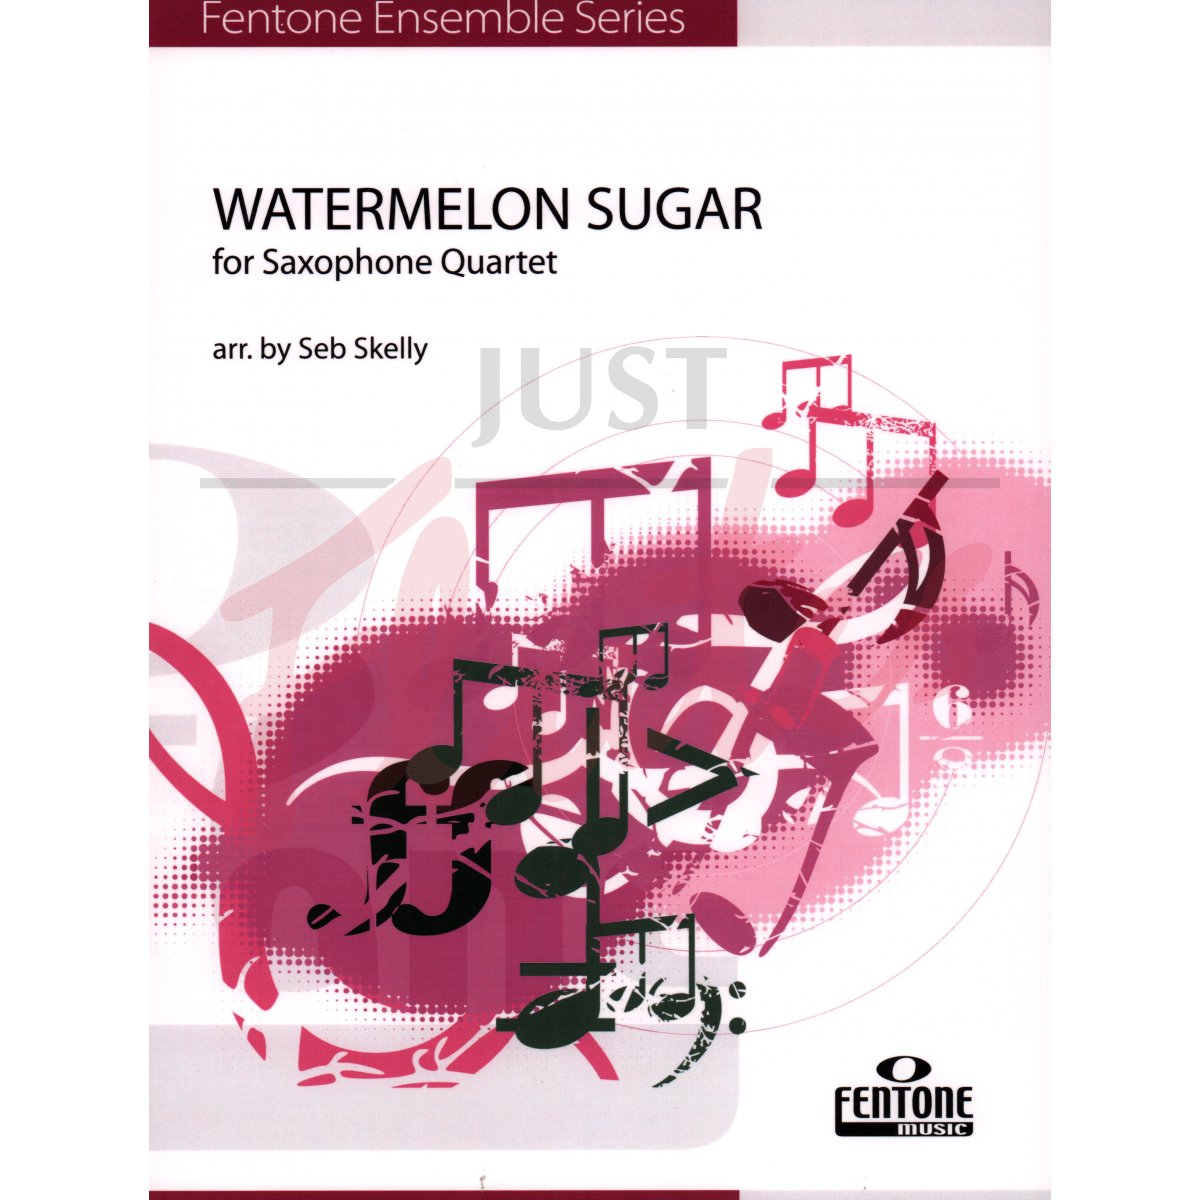 Watermelon Sugar for Saxophone Quartet